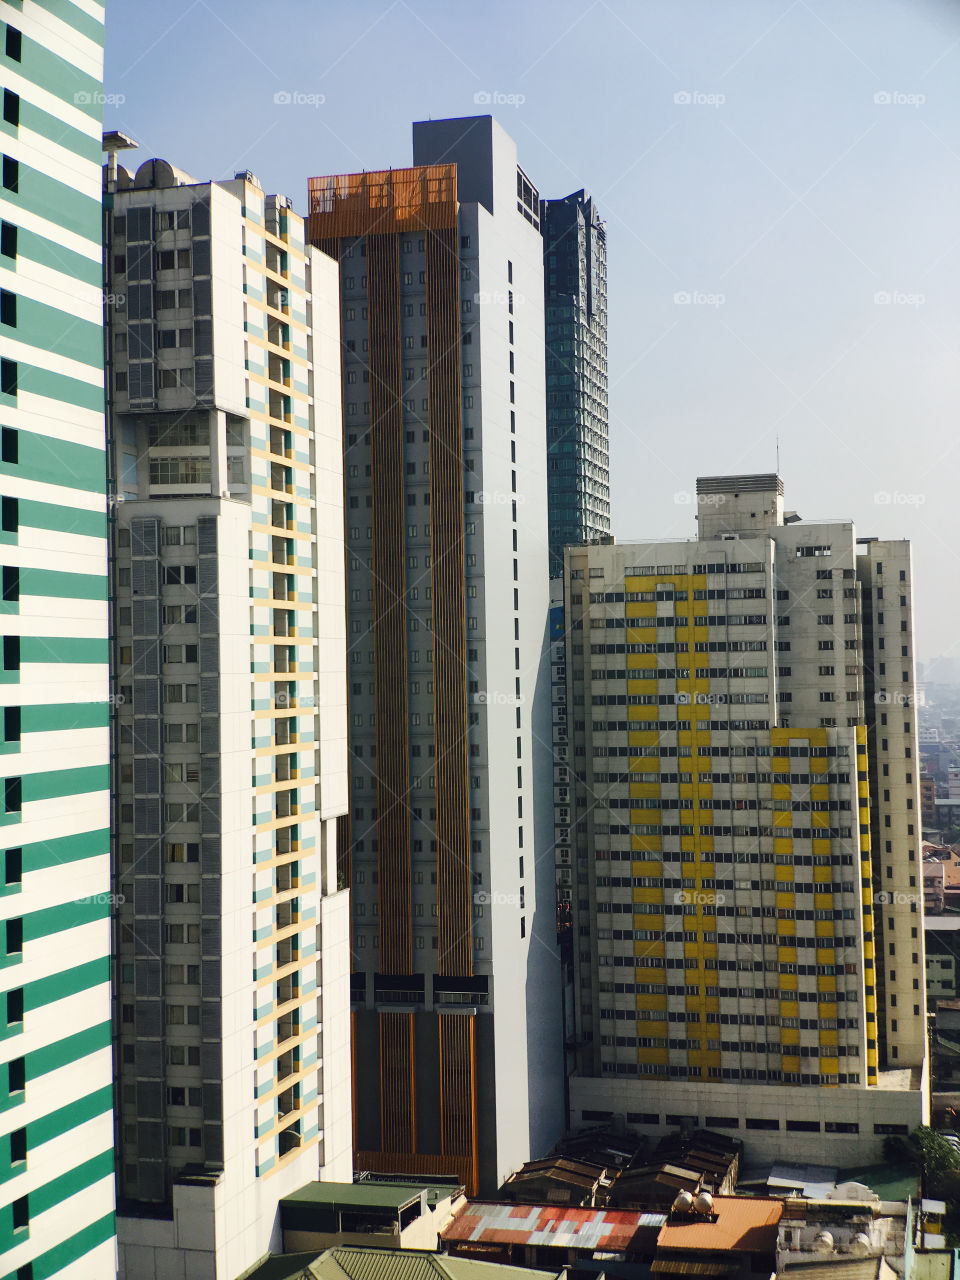 Building Manila